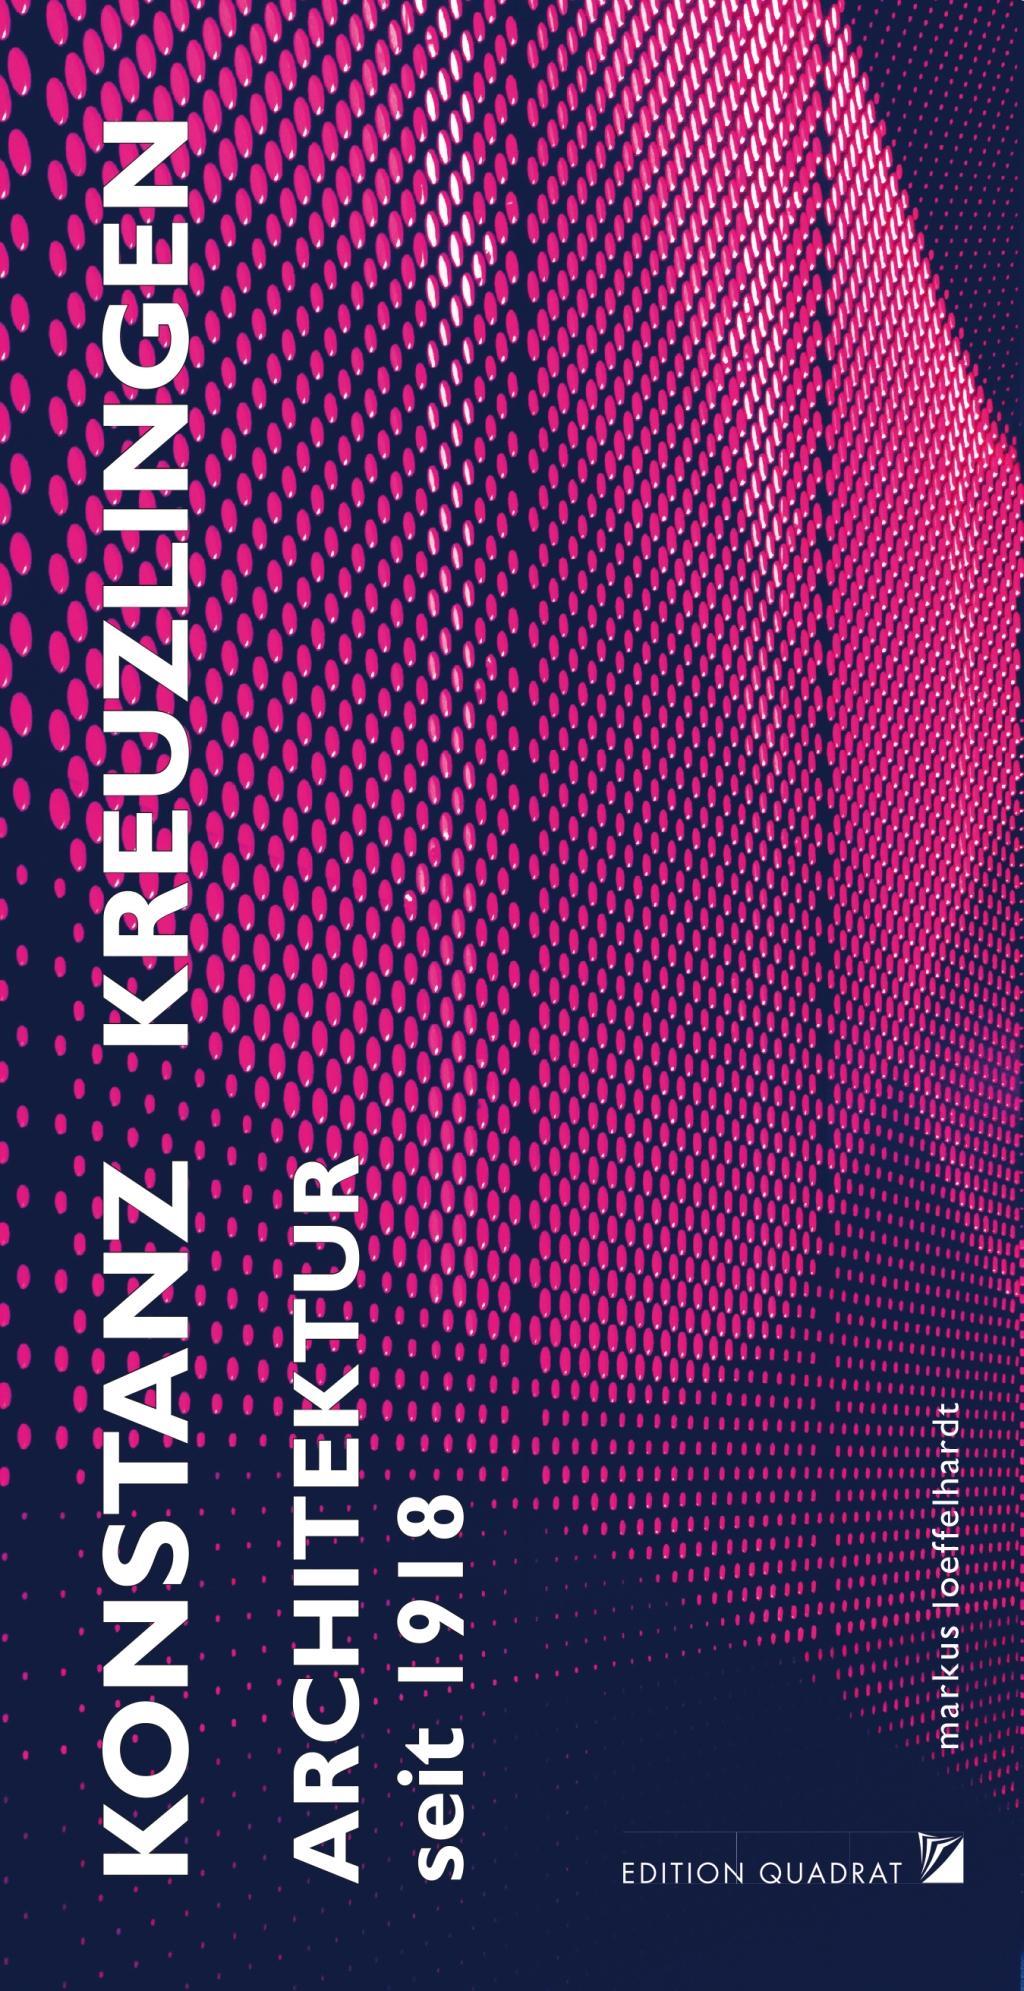 Architektur Konstanz Kreuzlingen seit 1918 - Löffelhardt, Markus|De Carli, Ammoma|Friedrich, Ilse|Mienhardt, Frank|Schwarting, Andreas